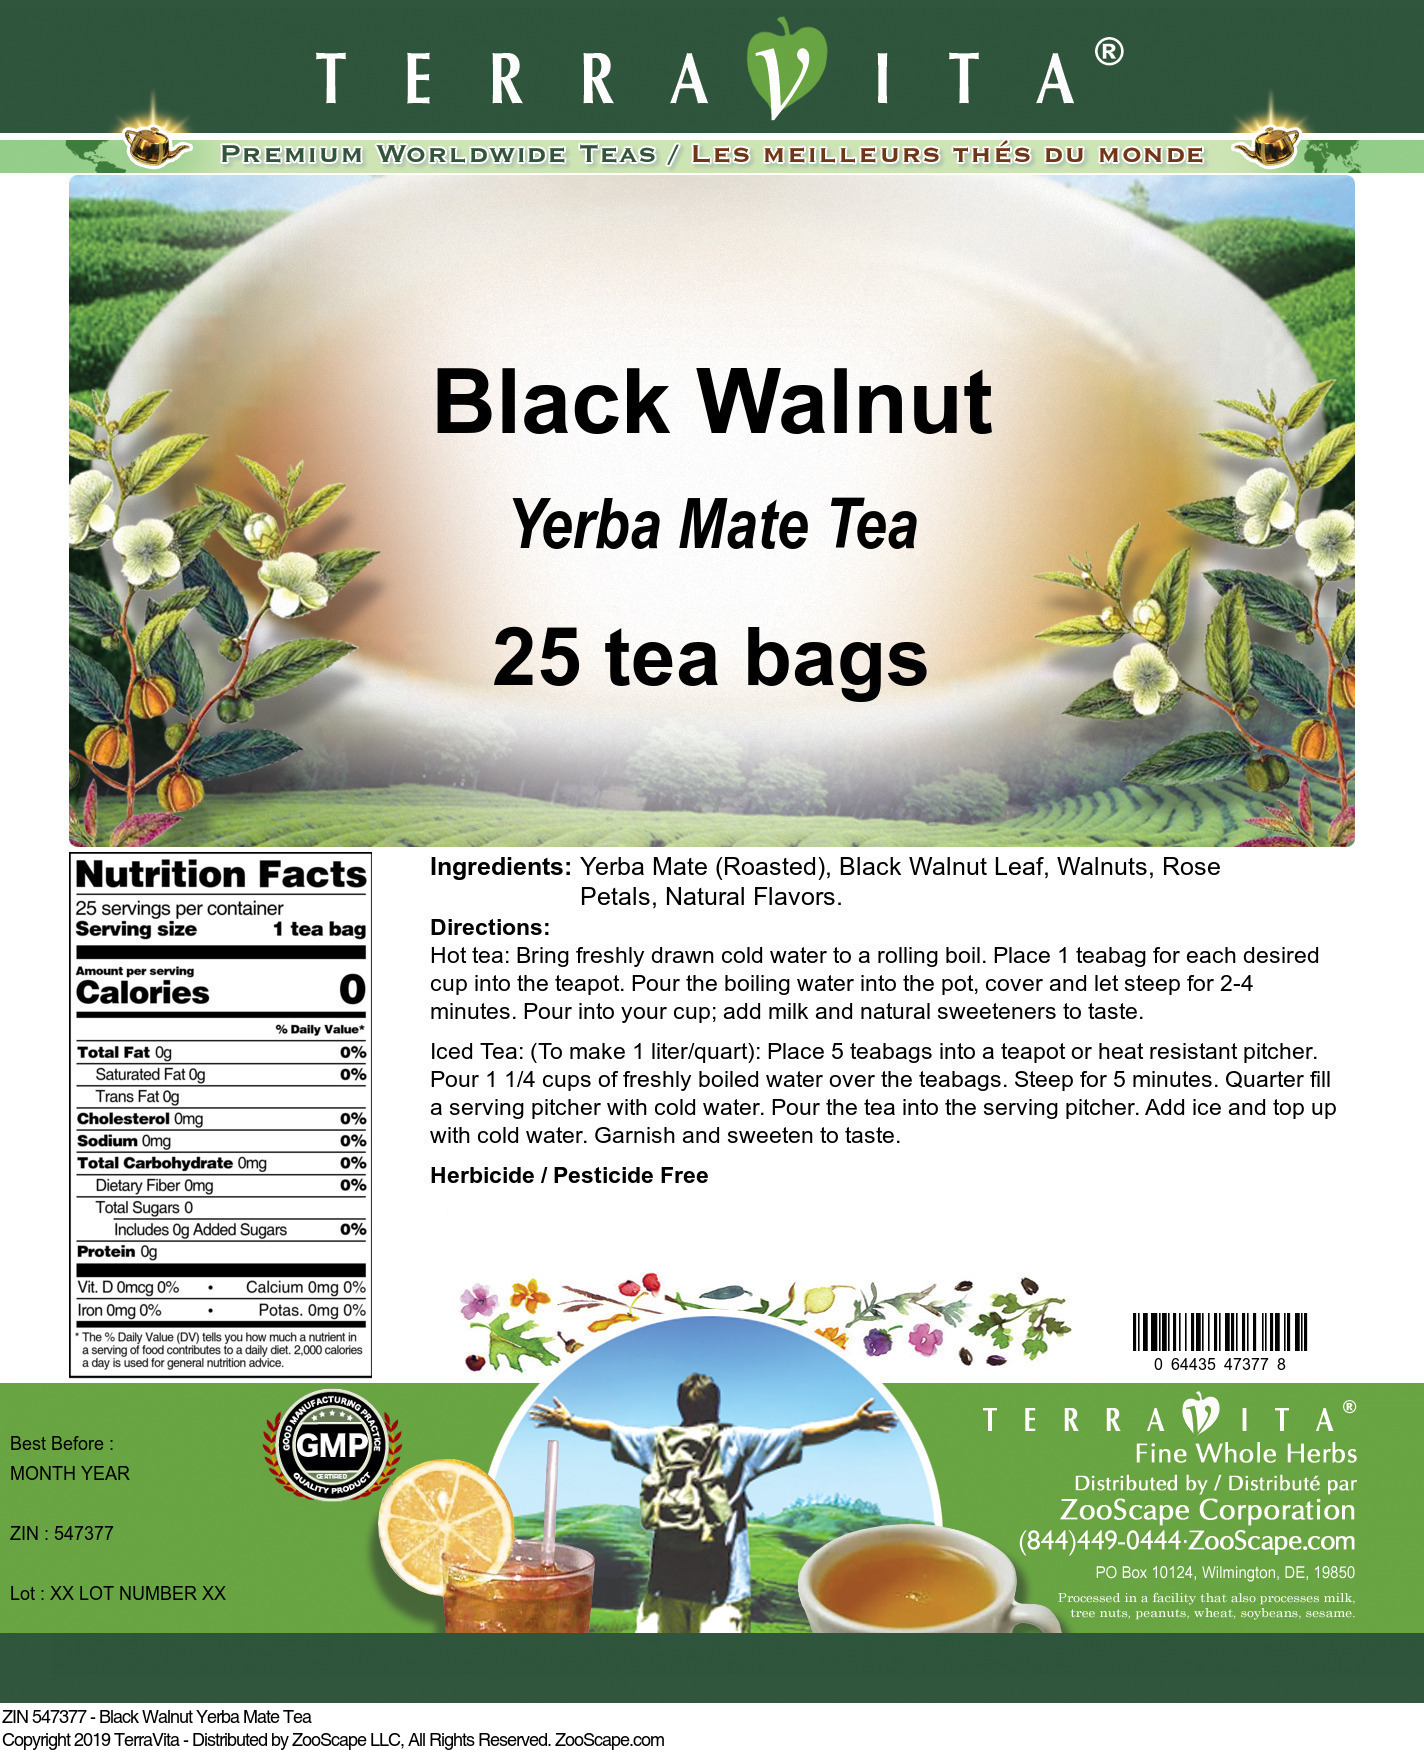 Black Walnut Yerba Mate Tea - Label